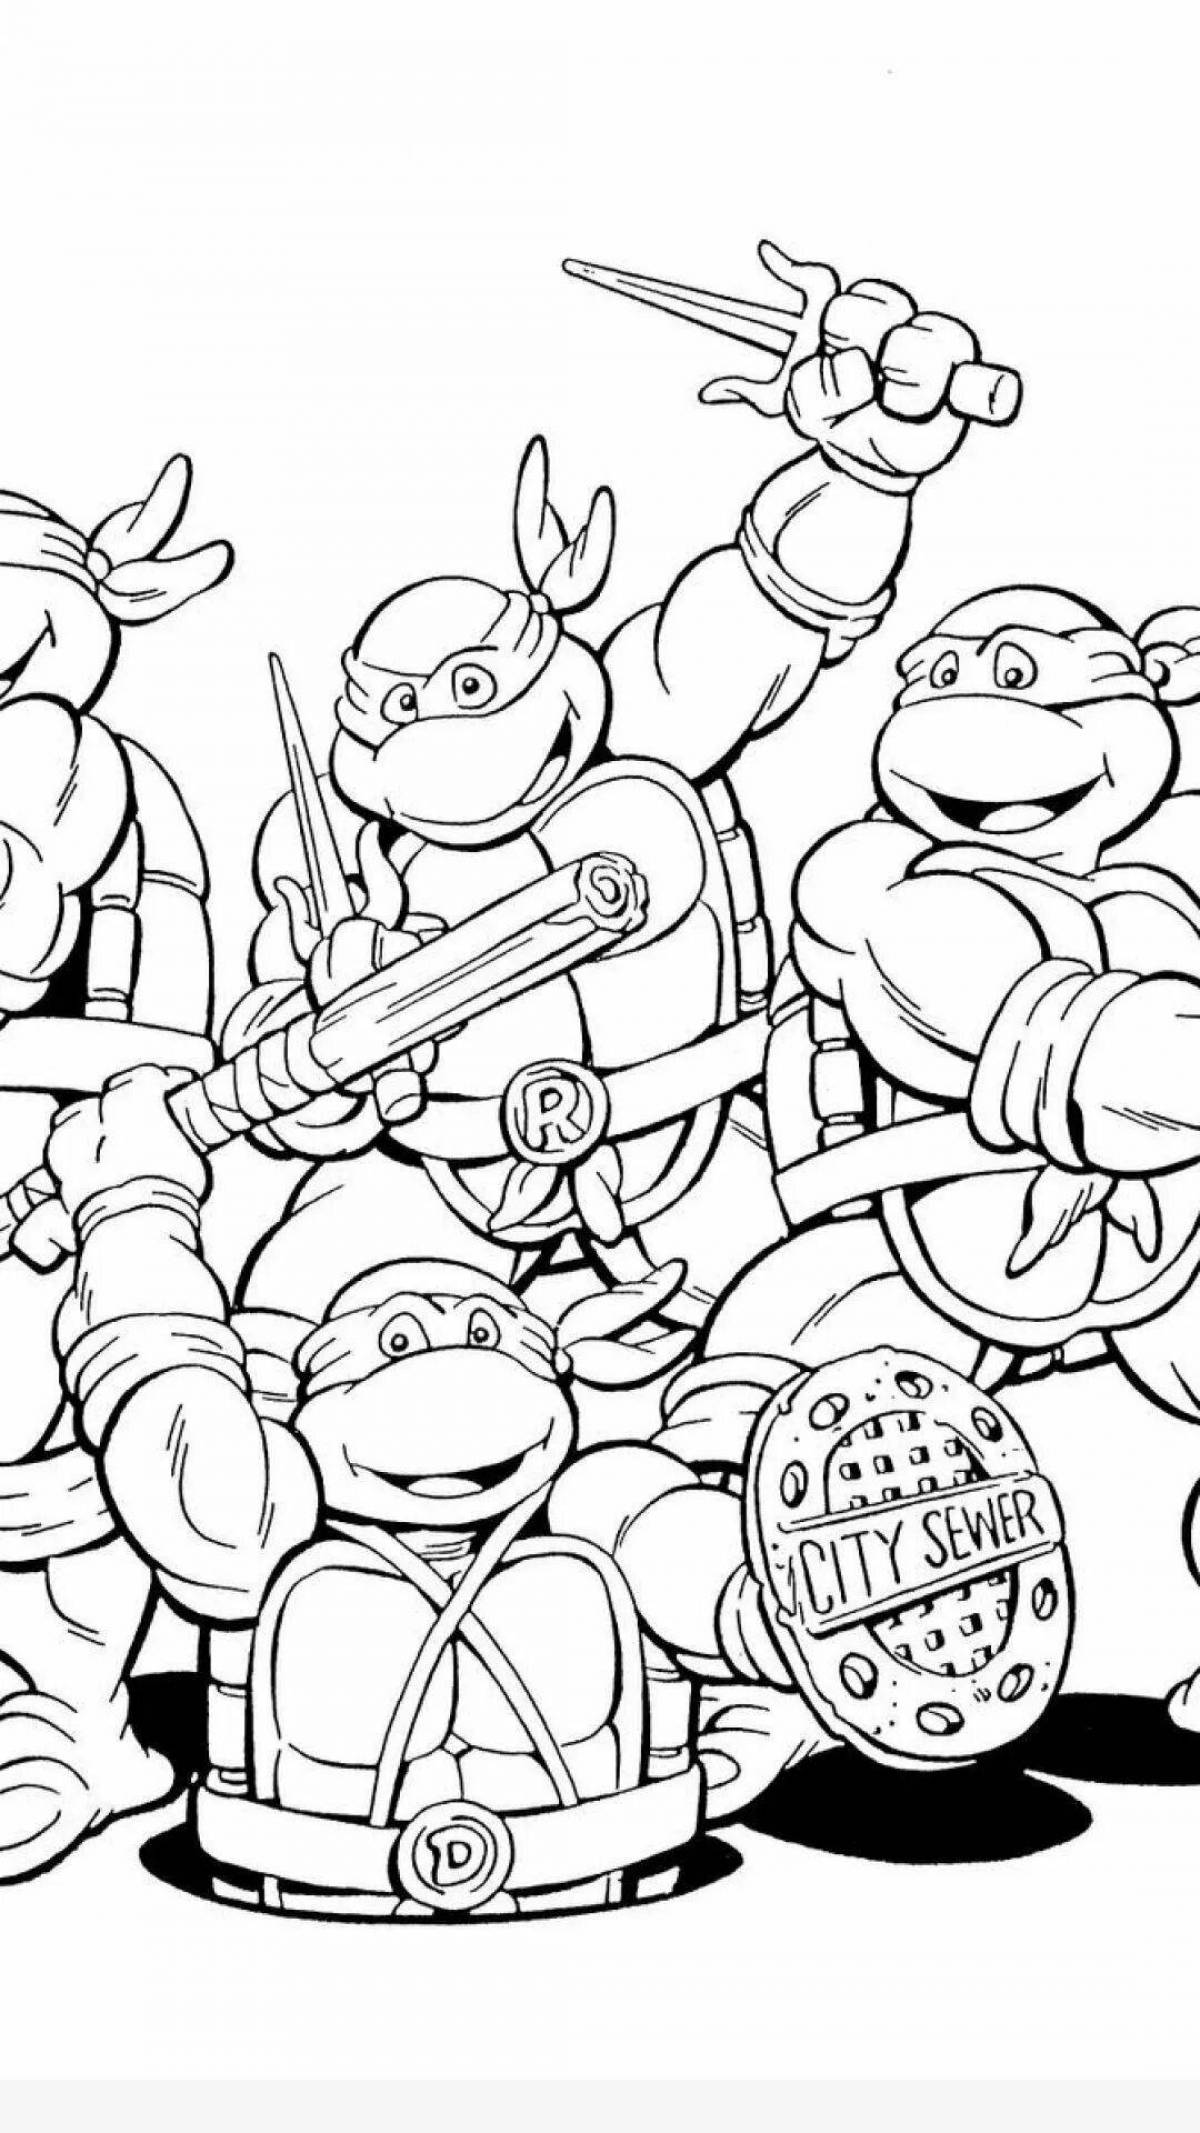 Mickey's Crazy Teenage Mutant Ninja Turtle Coloring Page